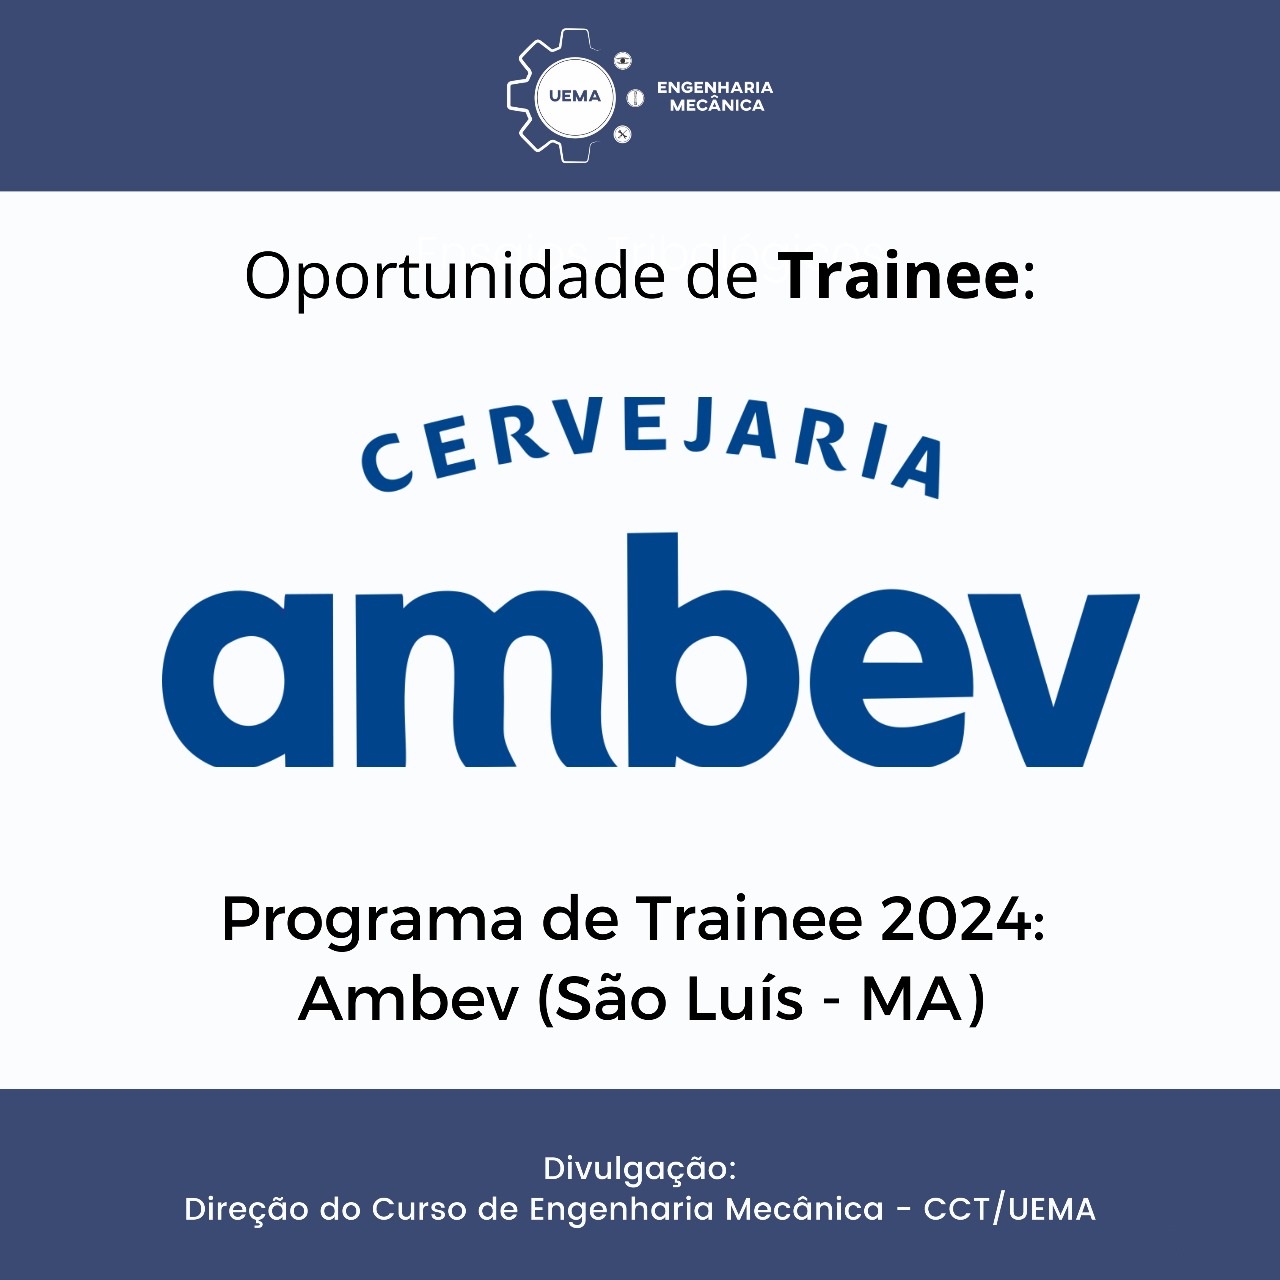 Programa de Trainee AMBEV 2024